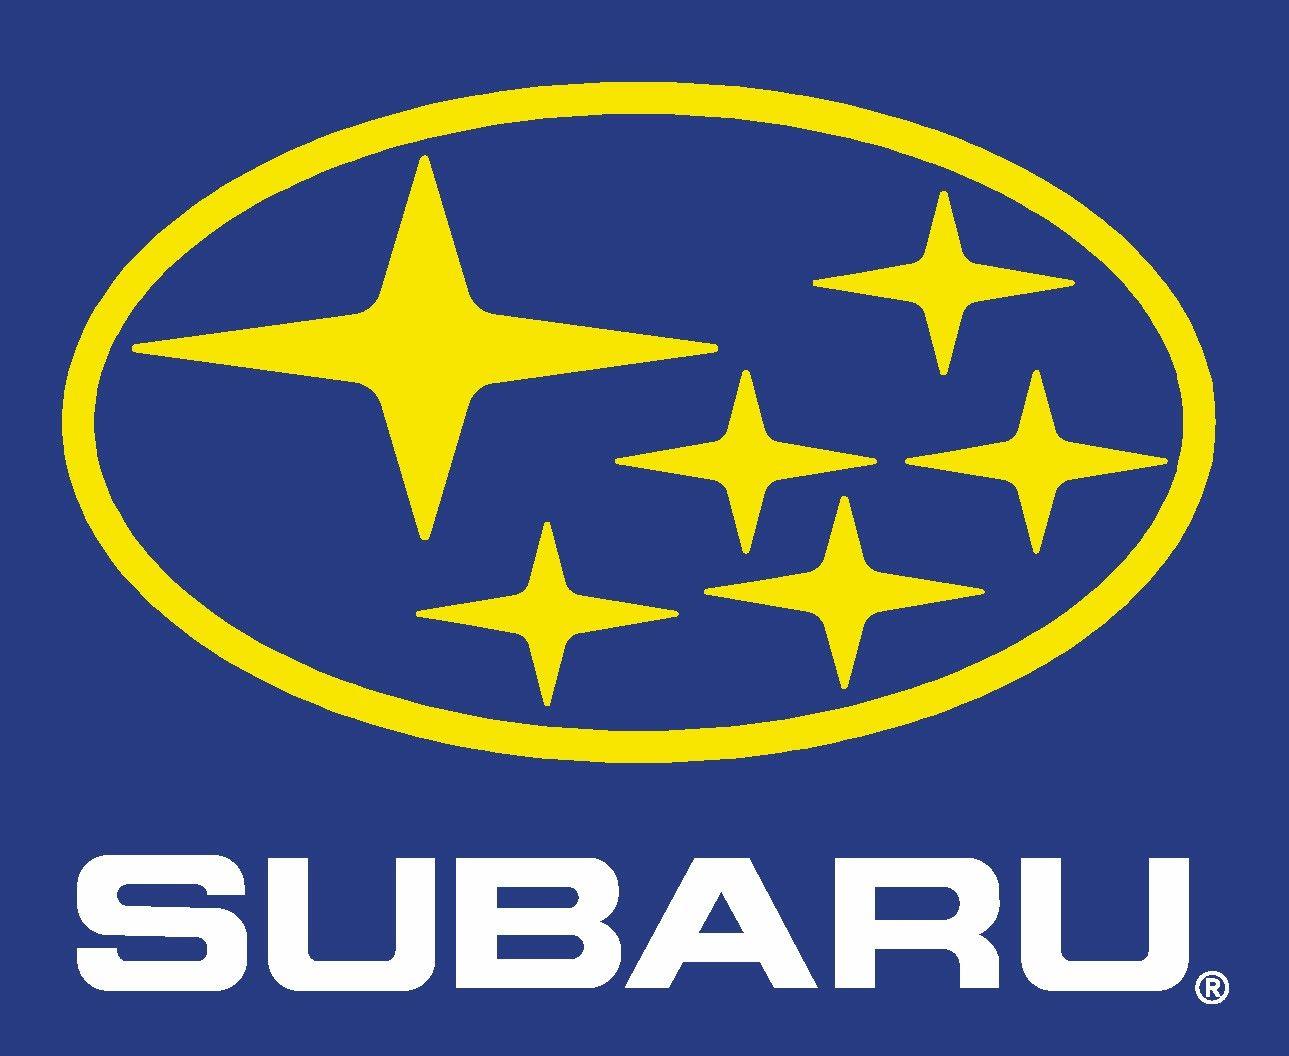 Blue and Yellow Sign Logo - Subaru Logo, Subaru Car Symbol Meaning and History | Car Brand Names.com